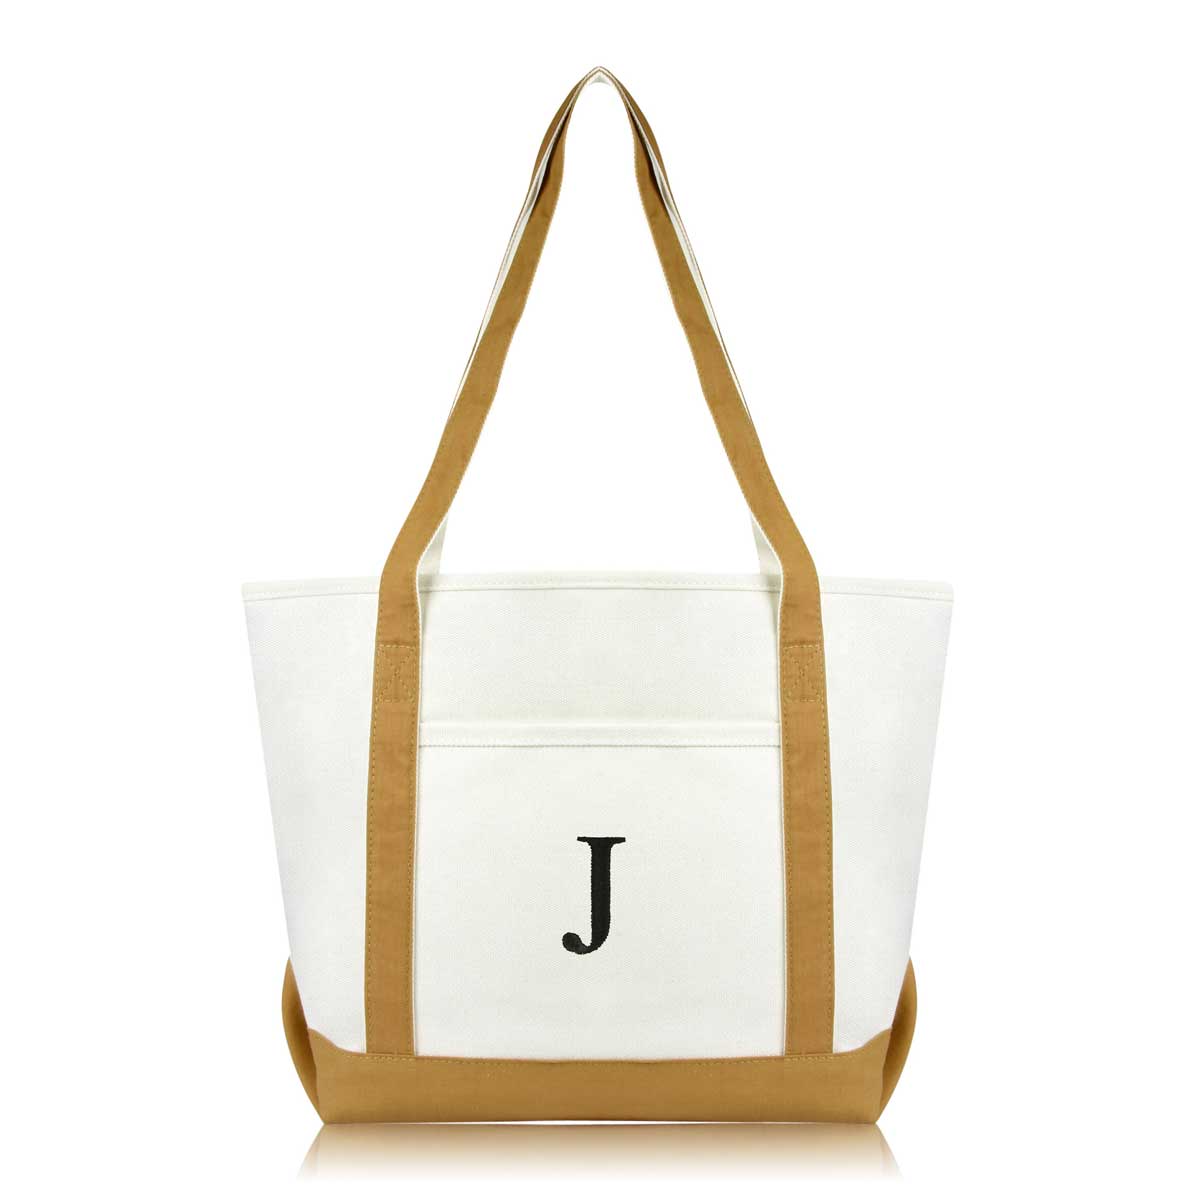 Dalix Medium Personalized Tote Bag Monogrammed Initial Letter - J